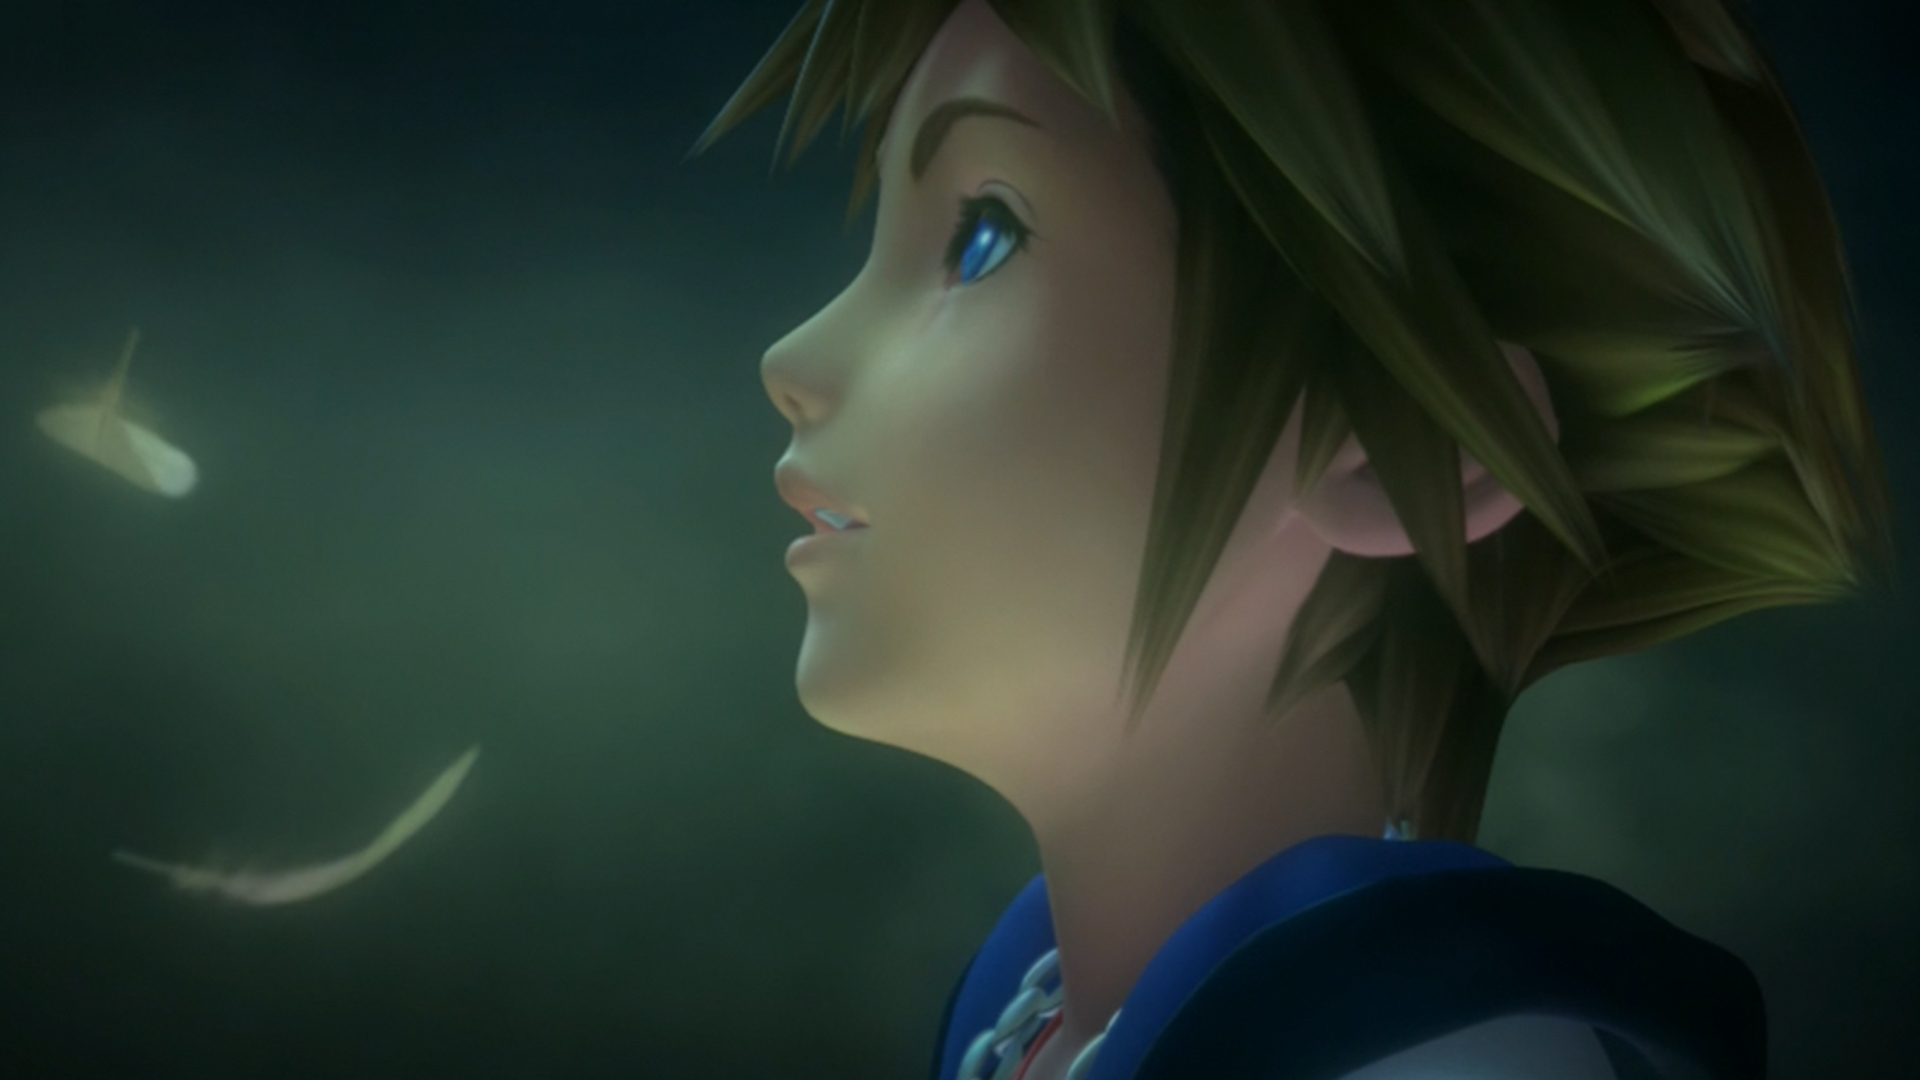 Scene from Kingdom Hearts 1.5 ReMix